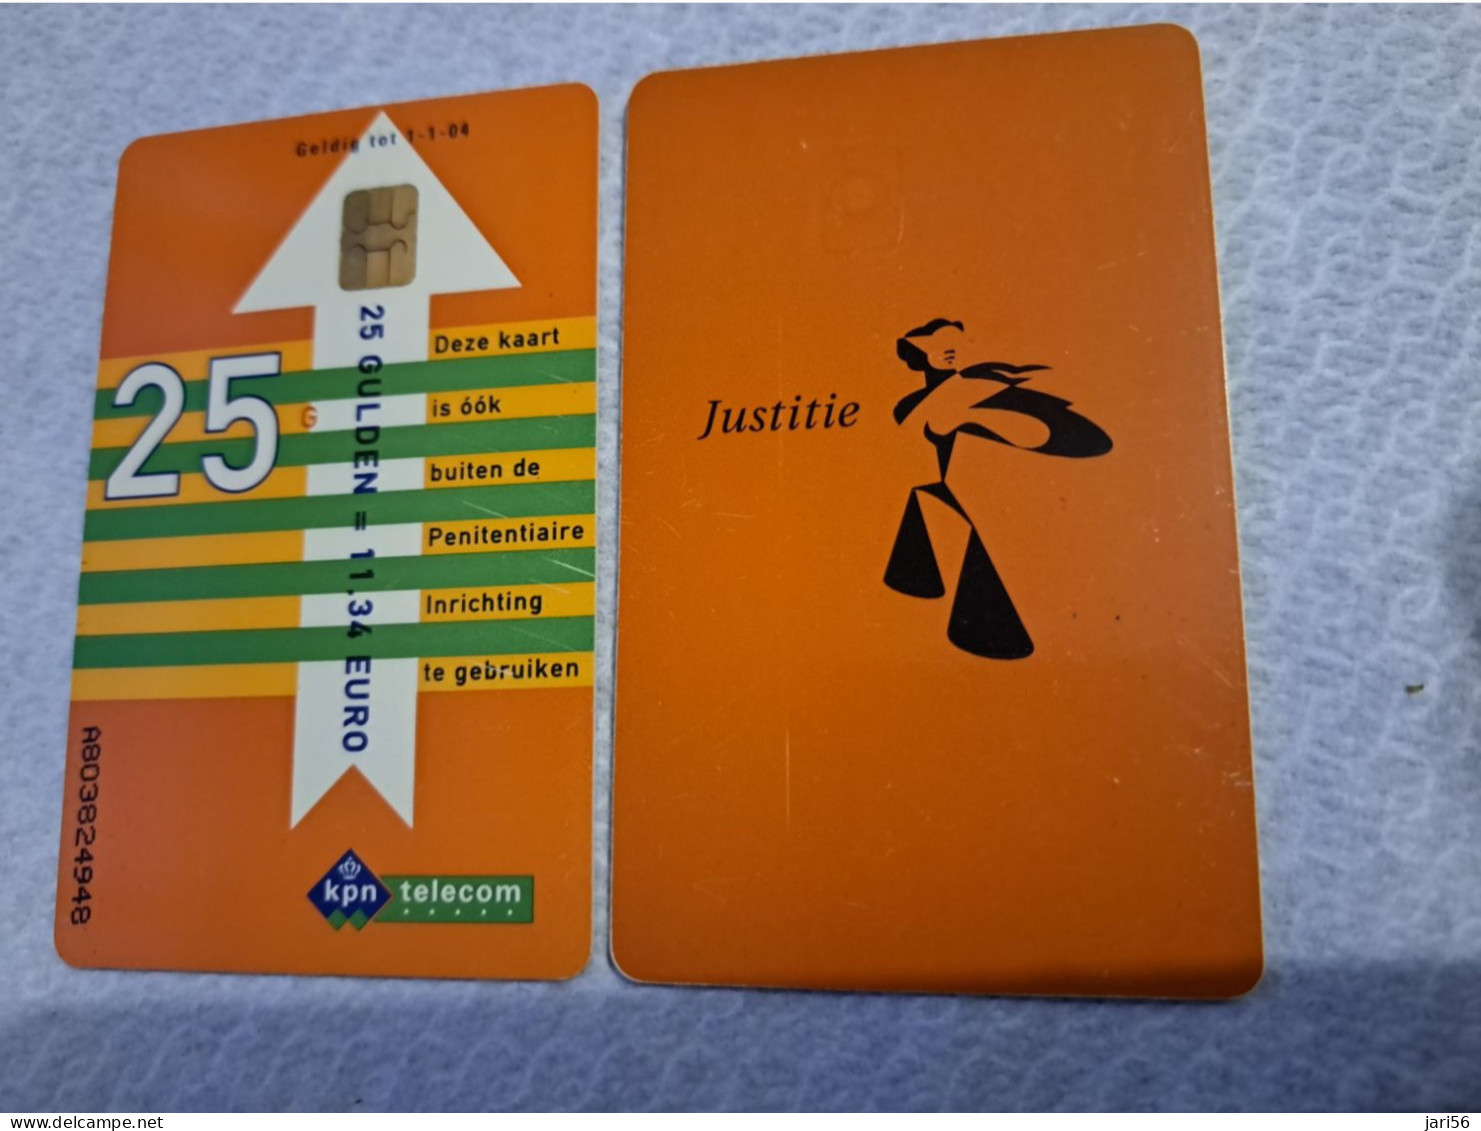 NETHERLANDS   HFL 25,-  / USED  / DATE  1-1-04  JUSTITIE/PRISON CARD  CHIP CARD/ USED   ** 16158** - Cartes GSM, Prépayées Et Recharges